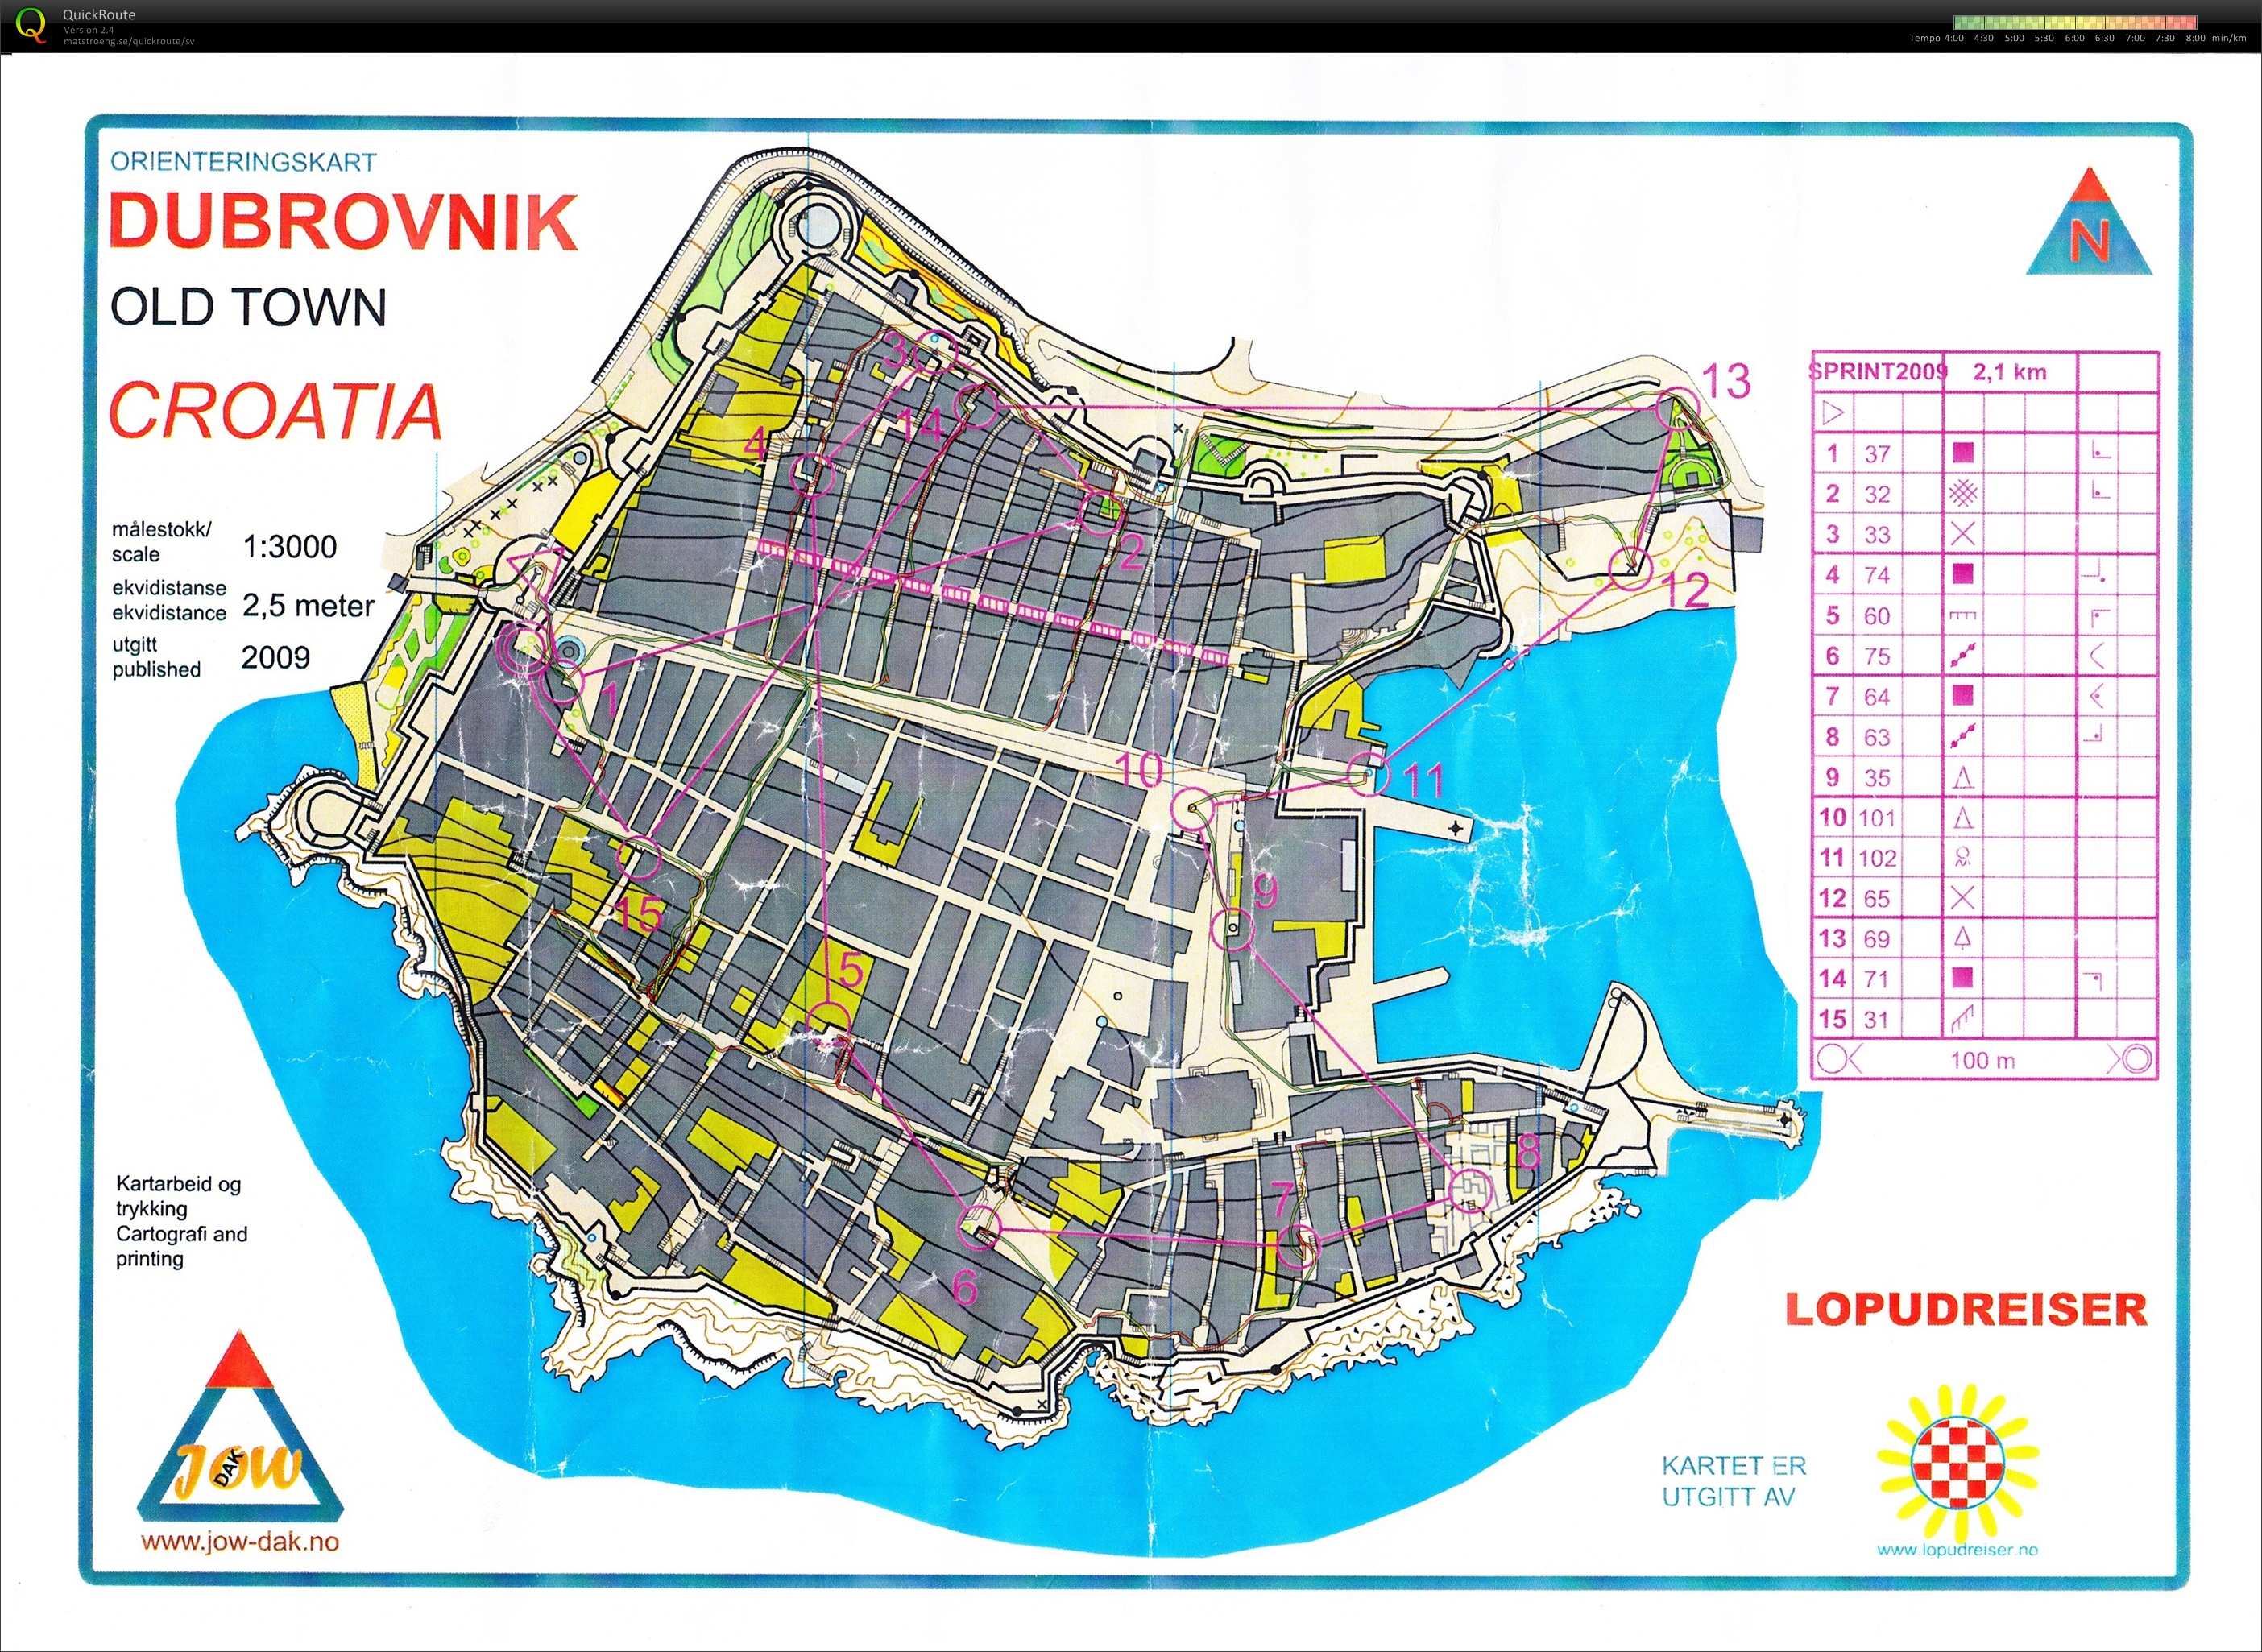 Sprinttrening, Dubrovnik (2013-07-27)